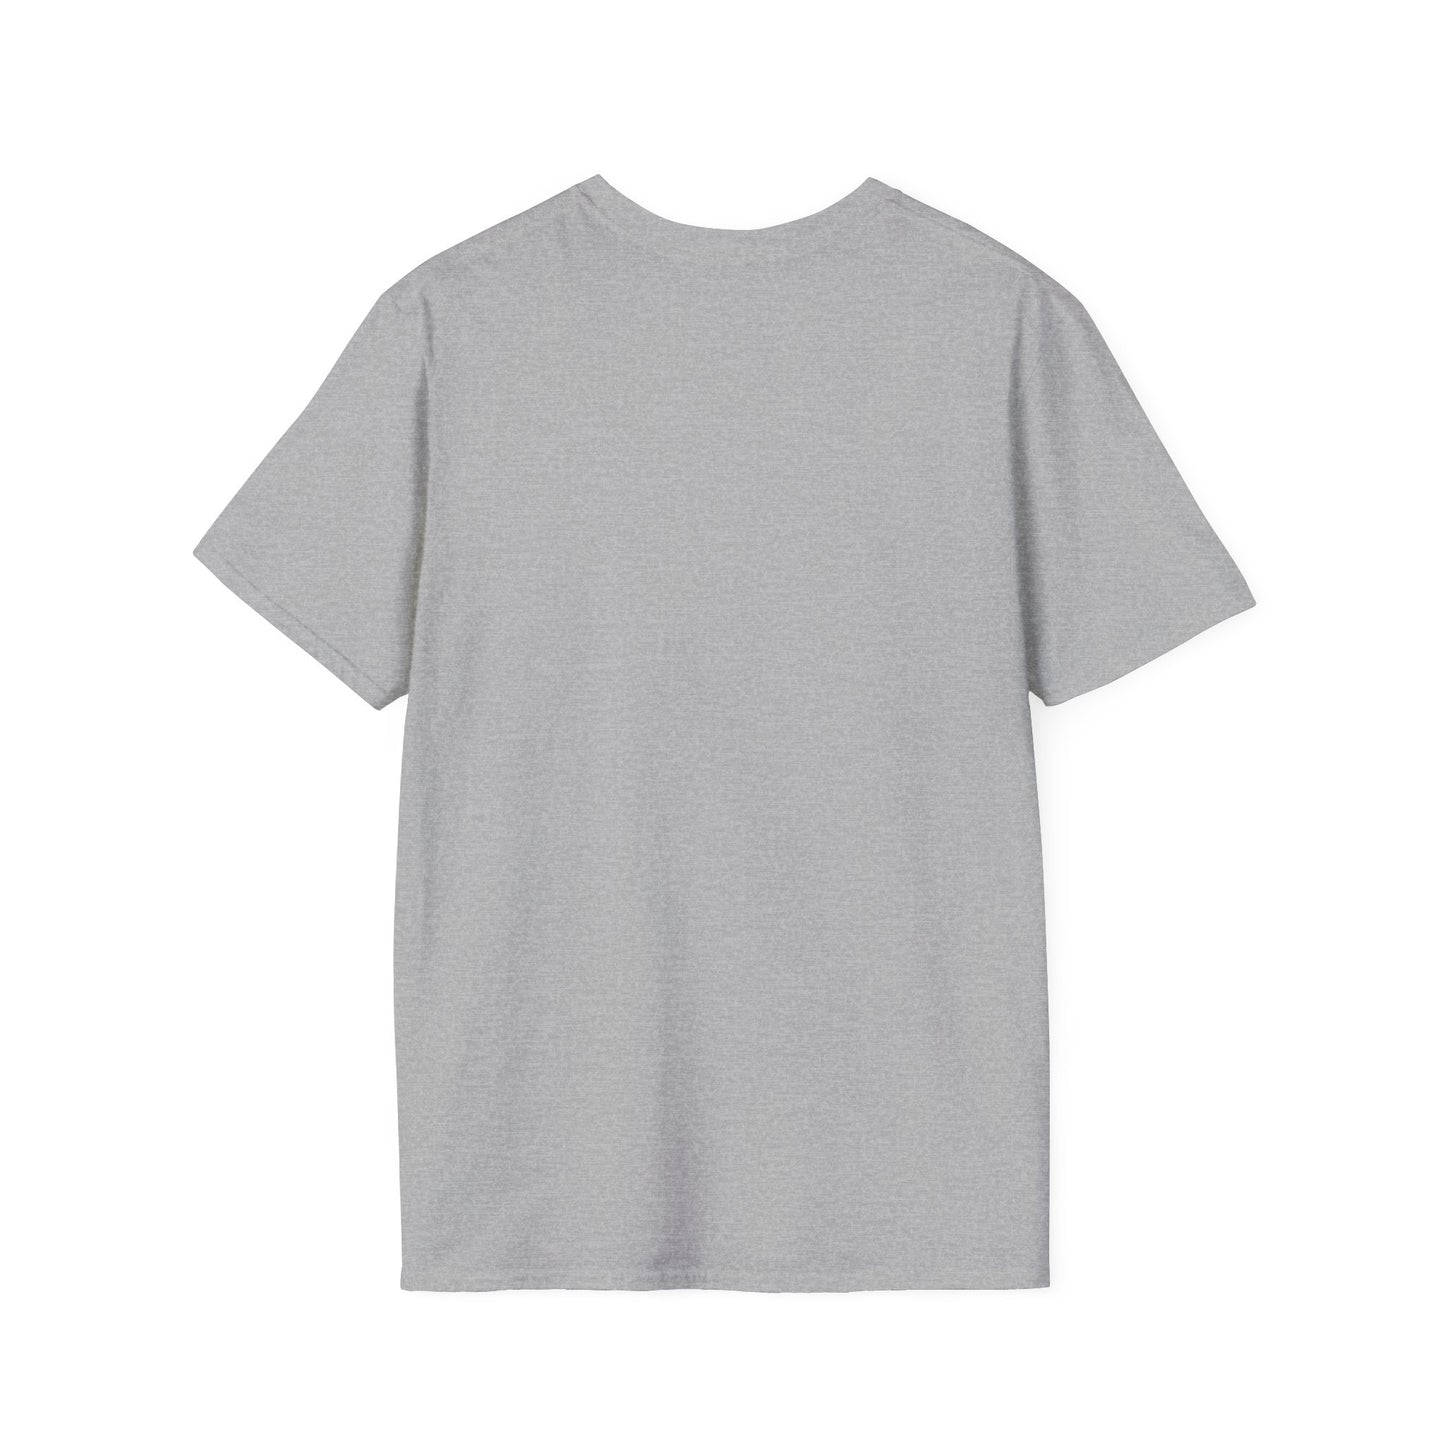 Unisex Softstyle T-Shirt - T-Ball Mom